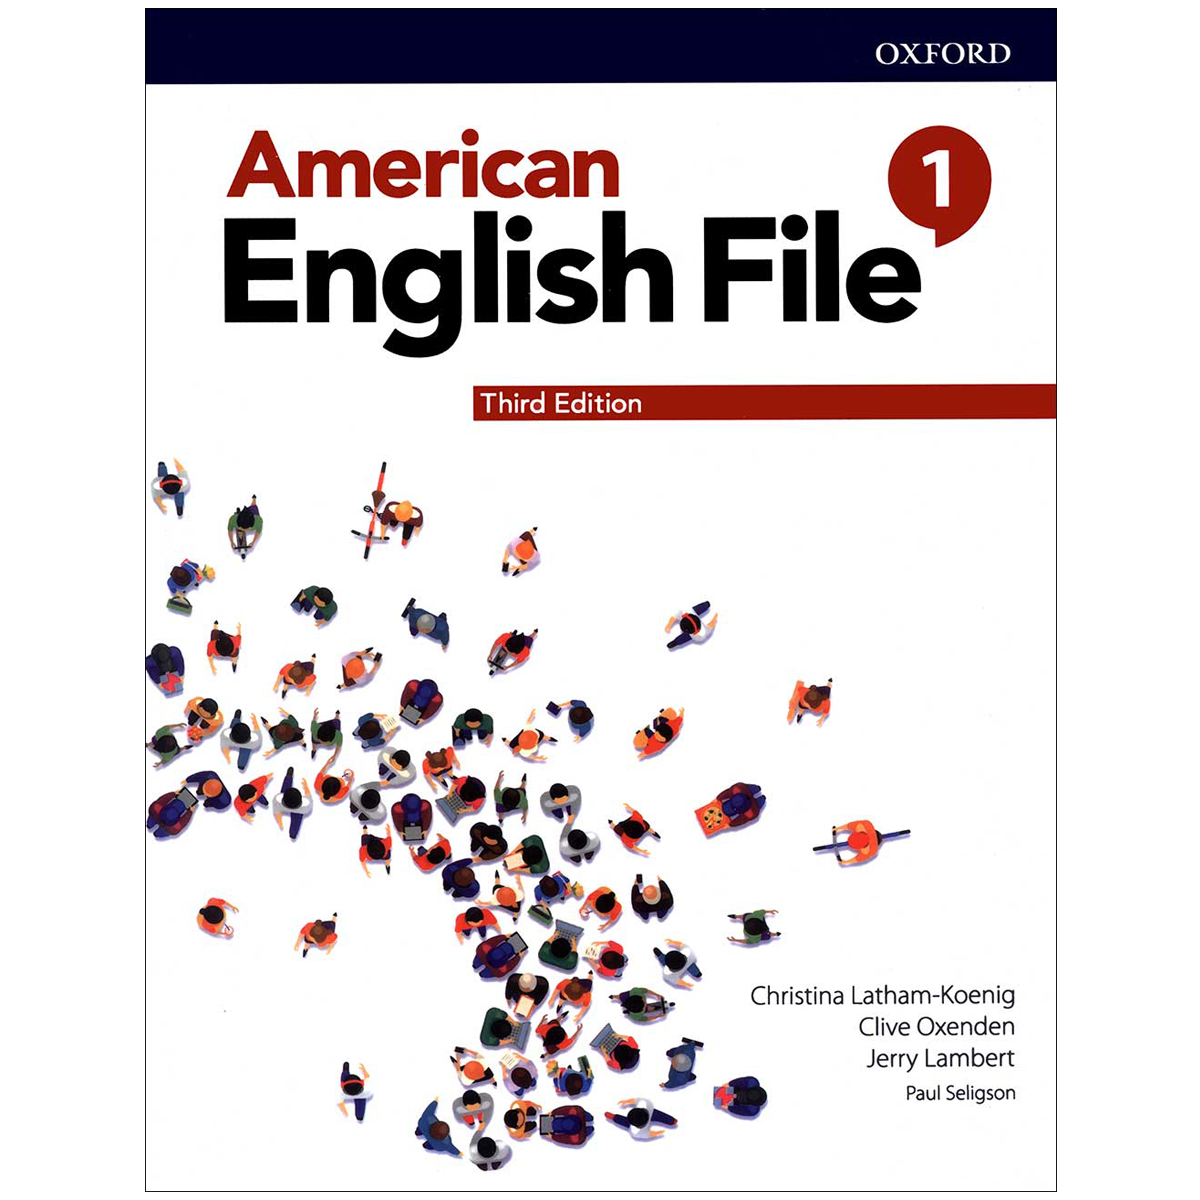 American English File 1A_Code02